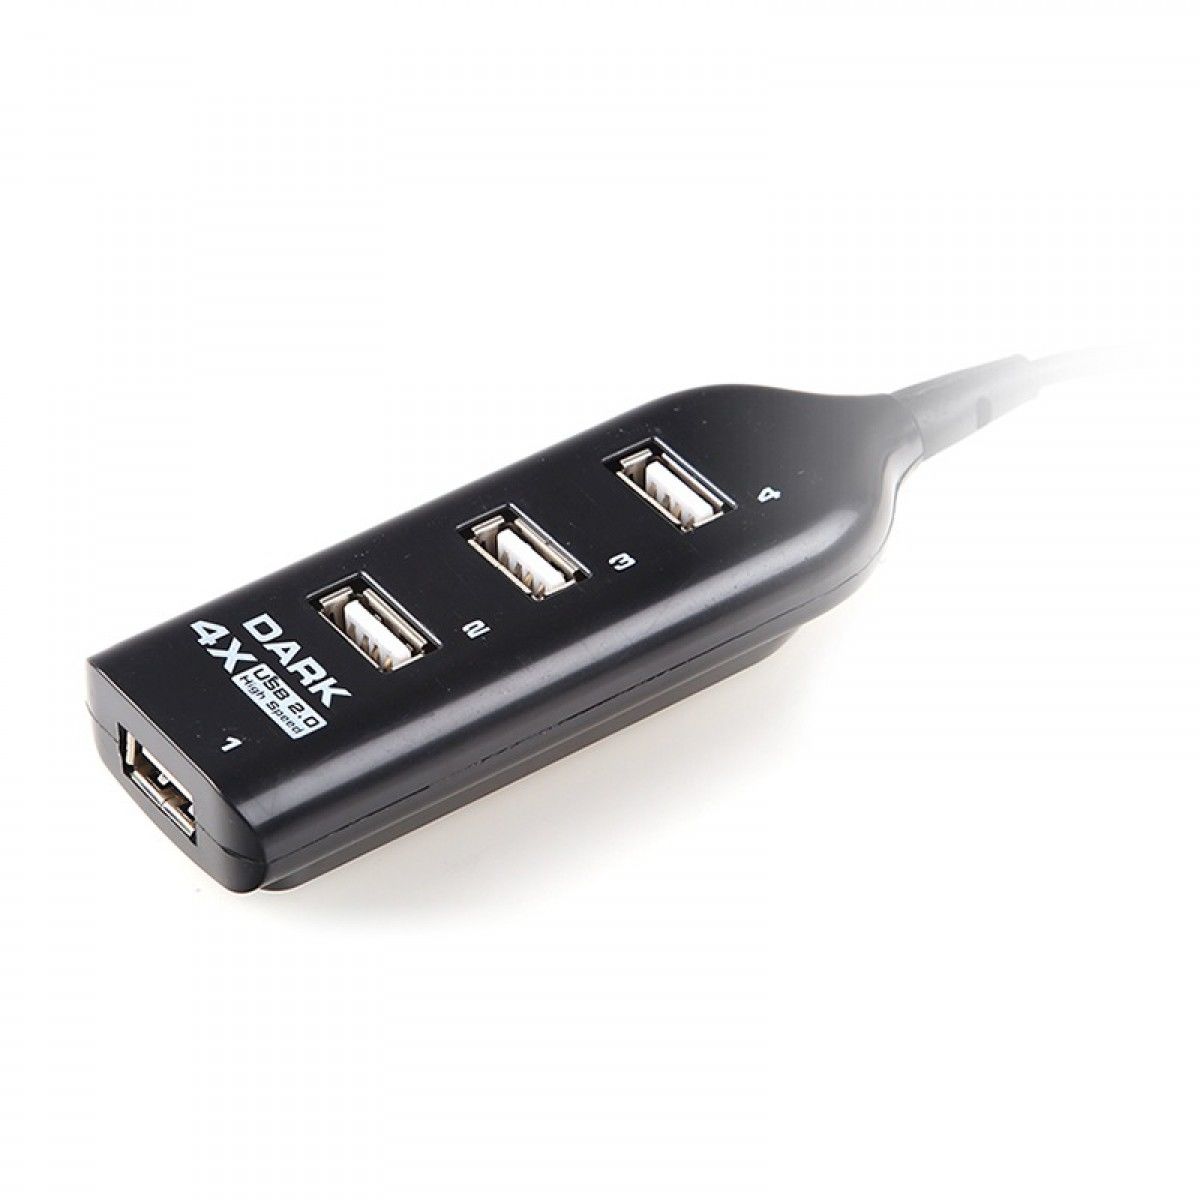 DARK DK-AC-USB24 4 PORT USB 2.0 USB MULTIPLER